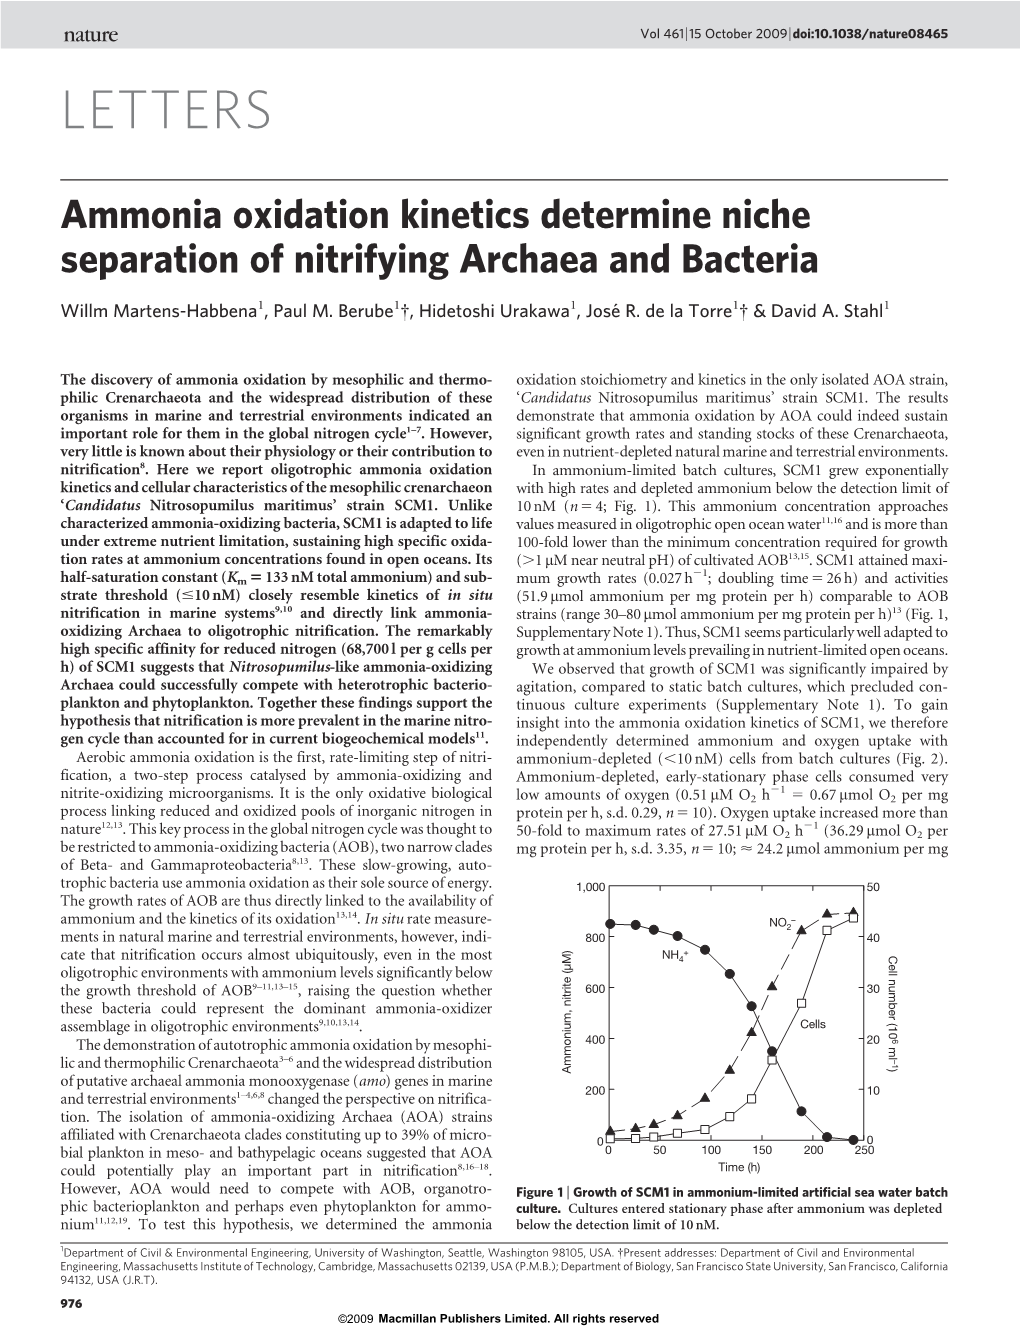 Martens-Habbena Et Al., 2009. “Ammonia Oxidation Kinetics